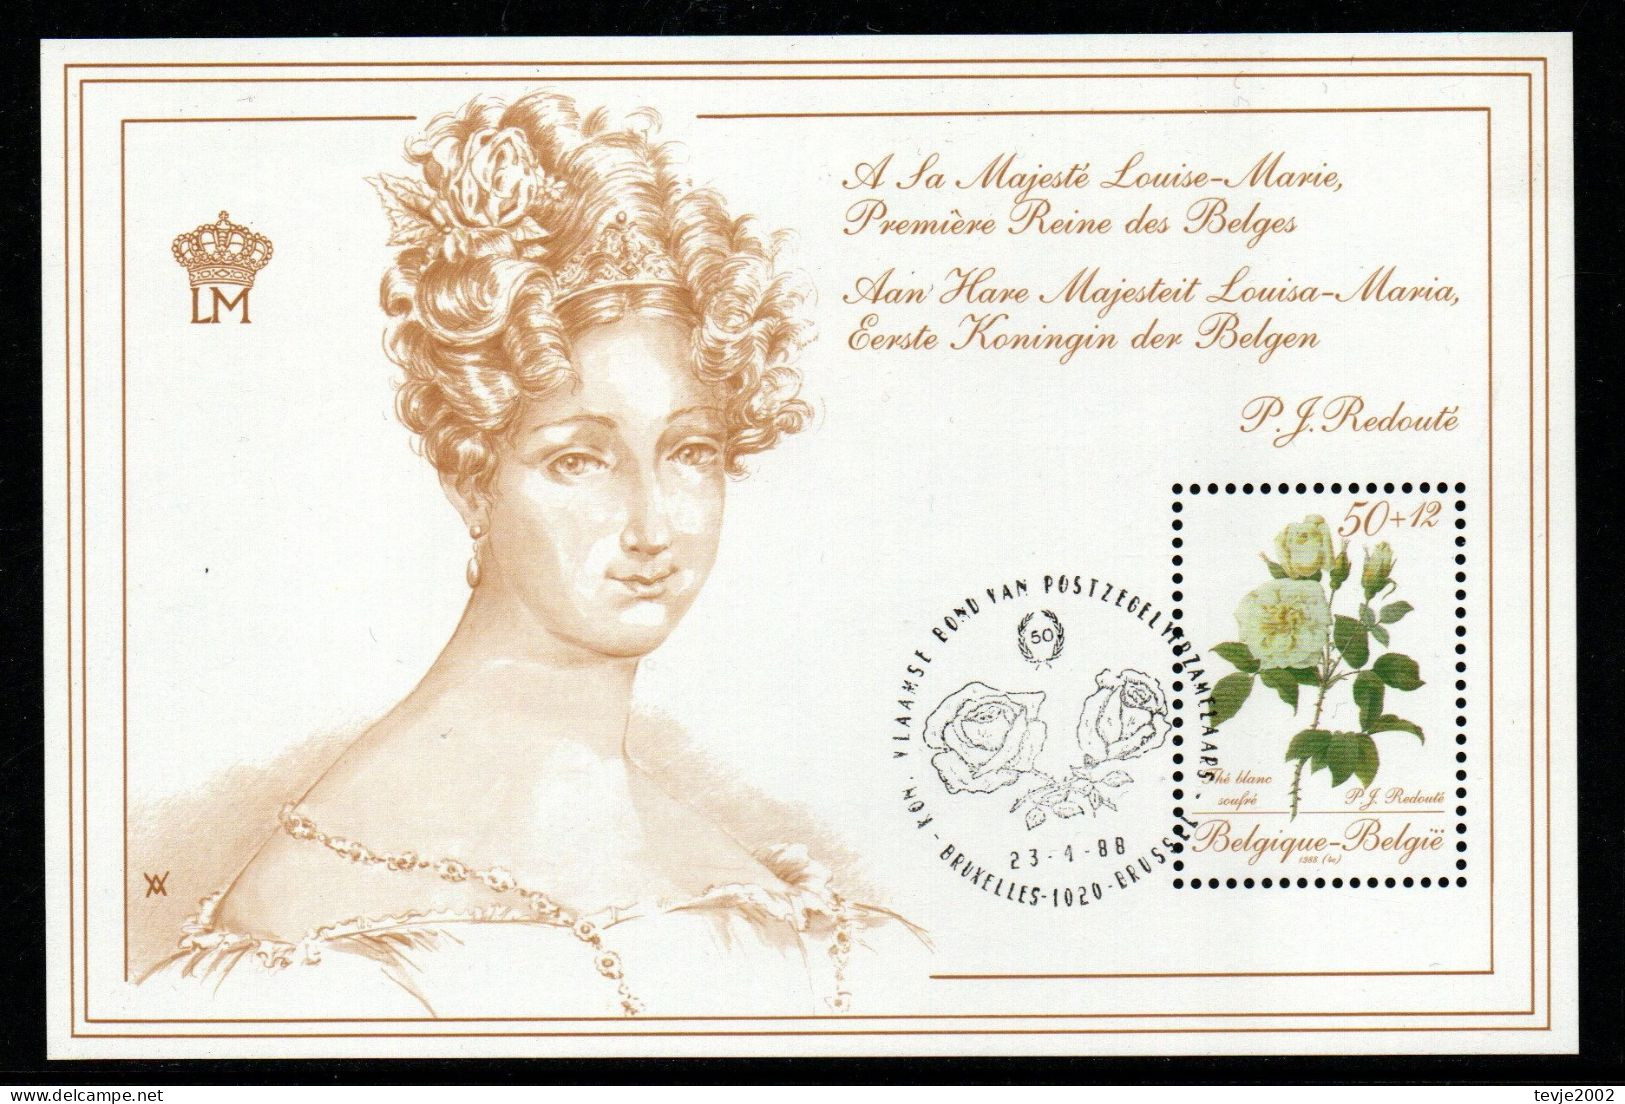 Belgien 1988 - Mi.Nr. Block 57 - Gestempelt Used - Blumen Flowers Rosen Flowers - Rosas